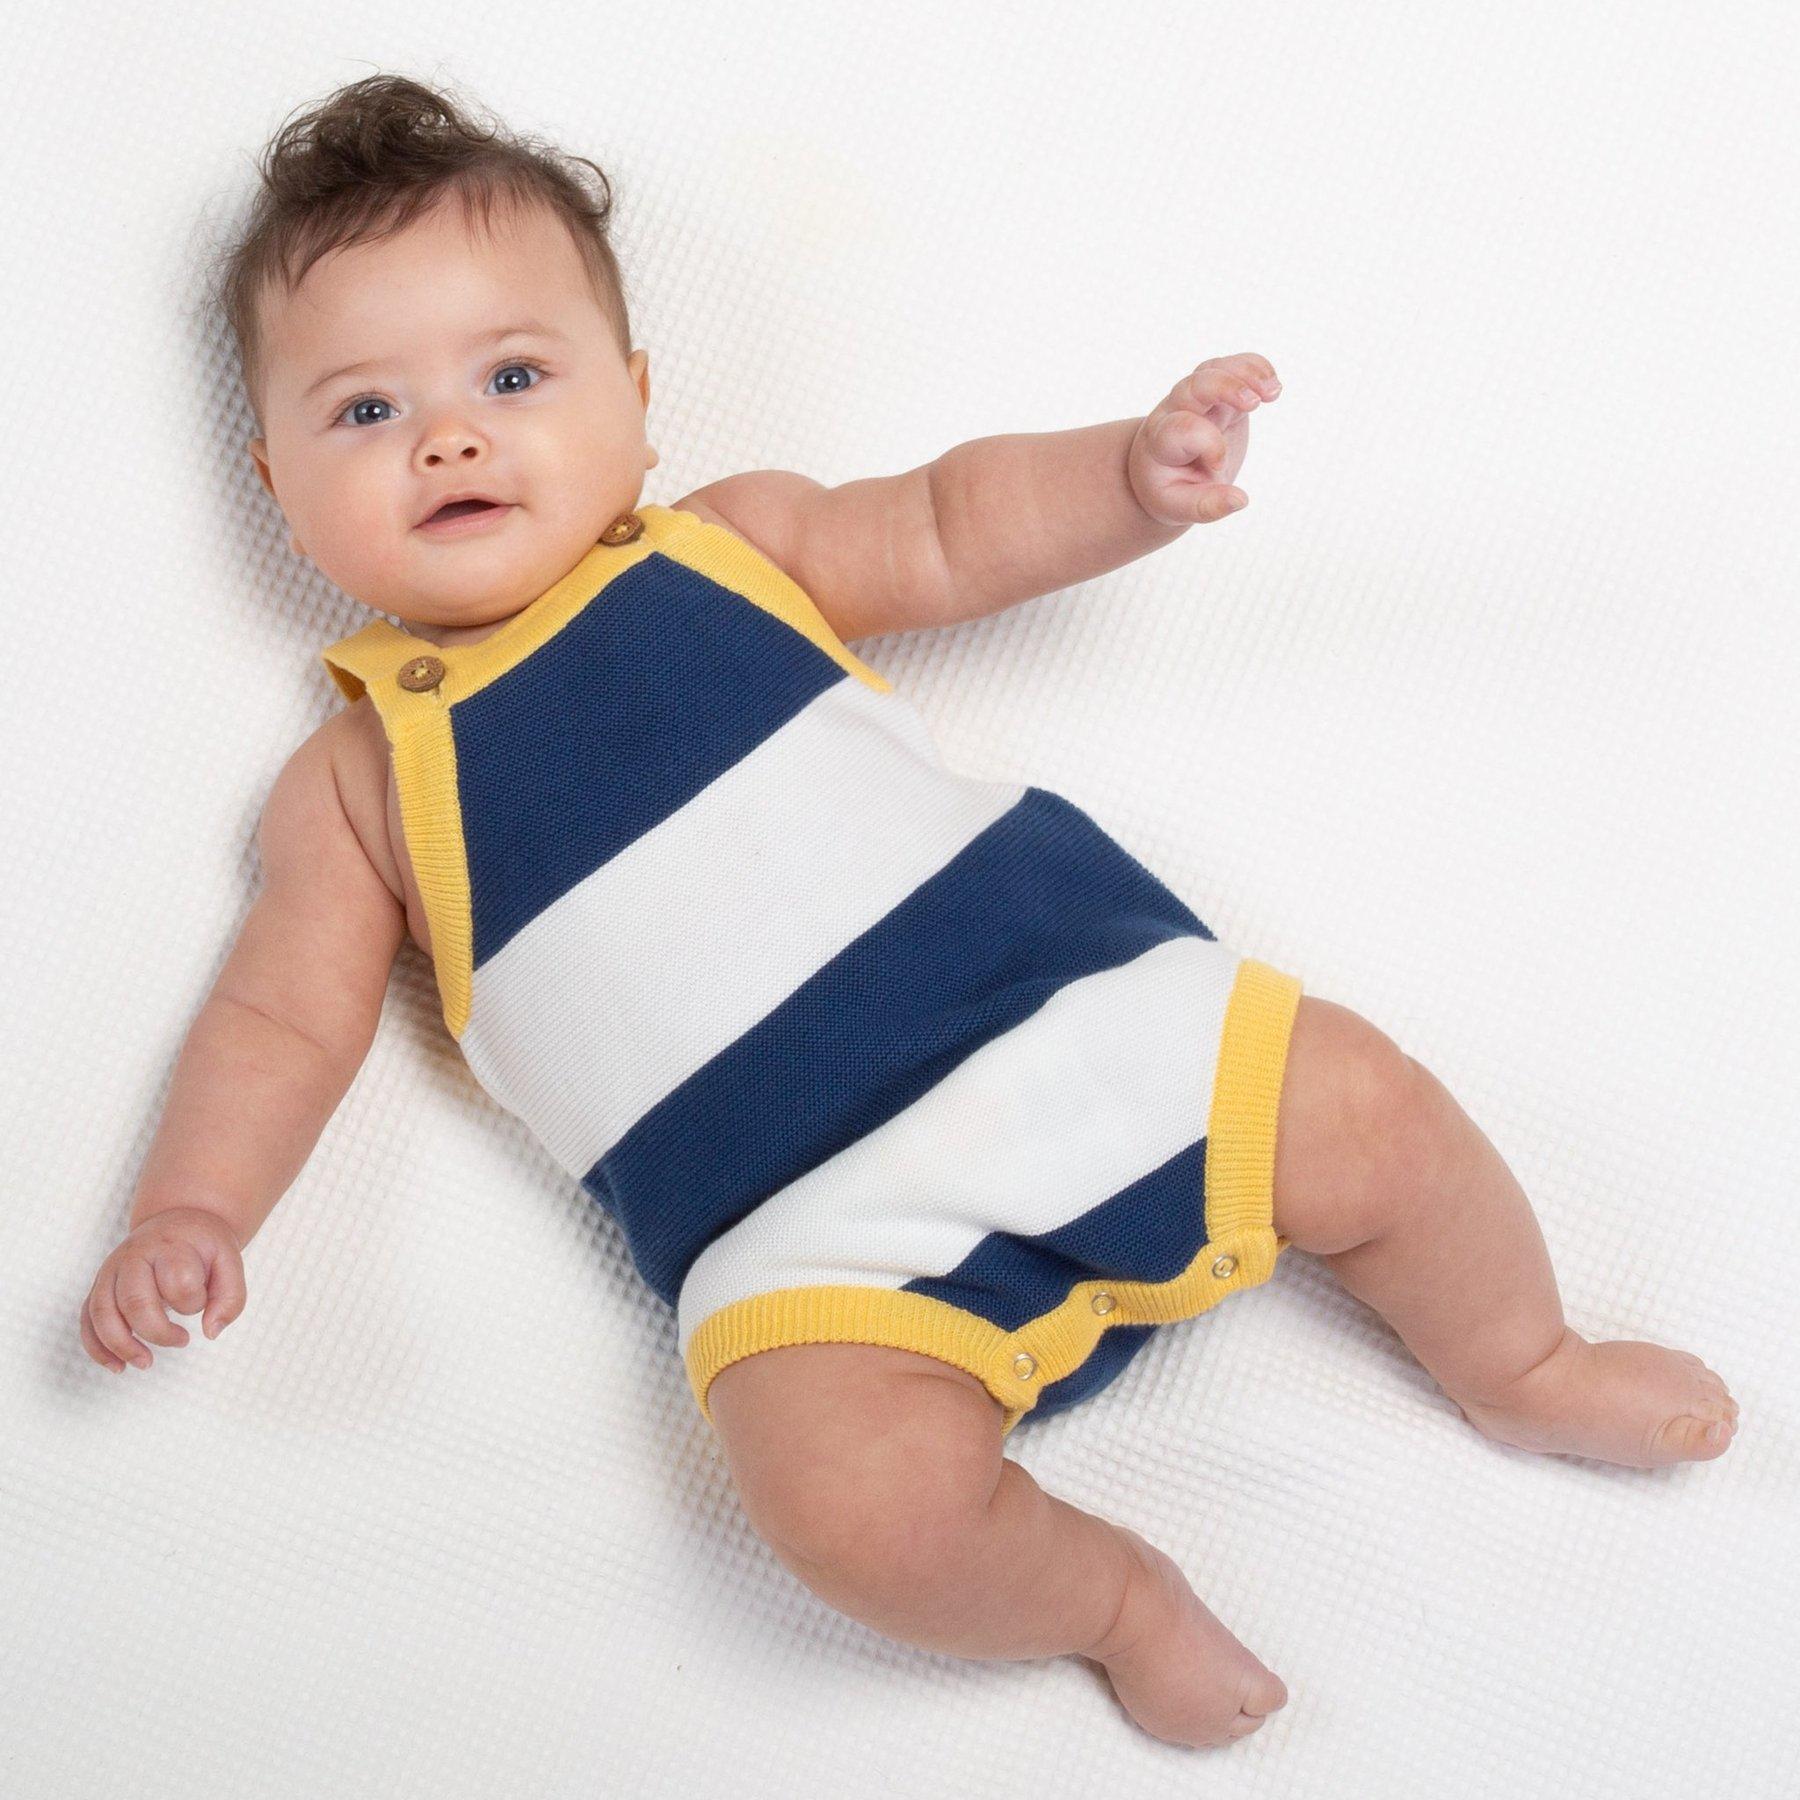 Baby wearing Kite Clothing Nautical Knit Romper